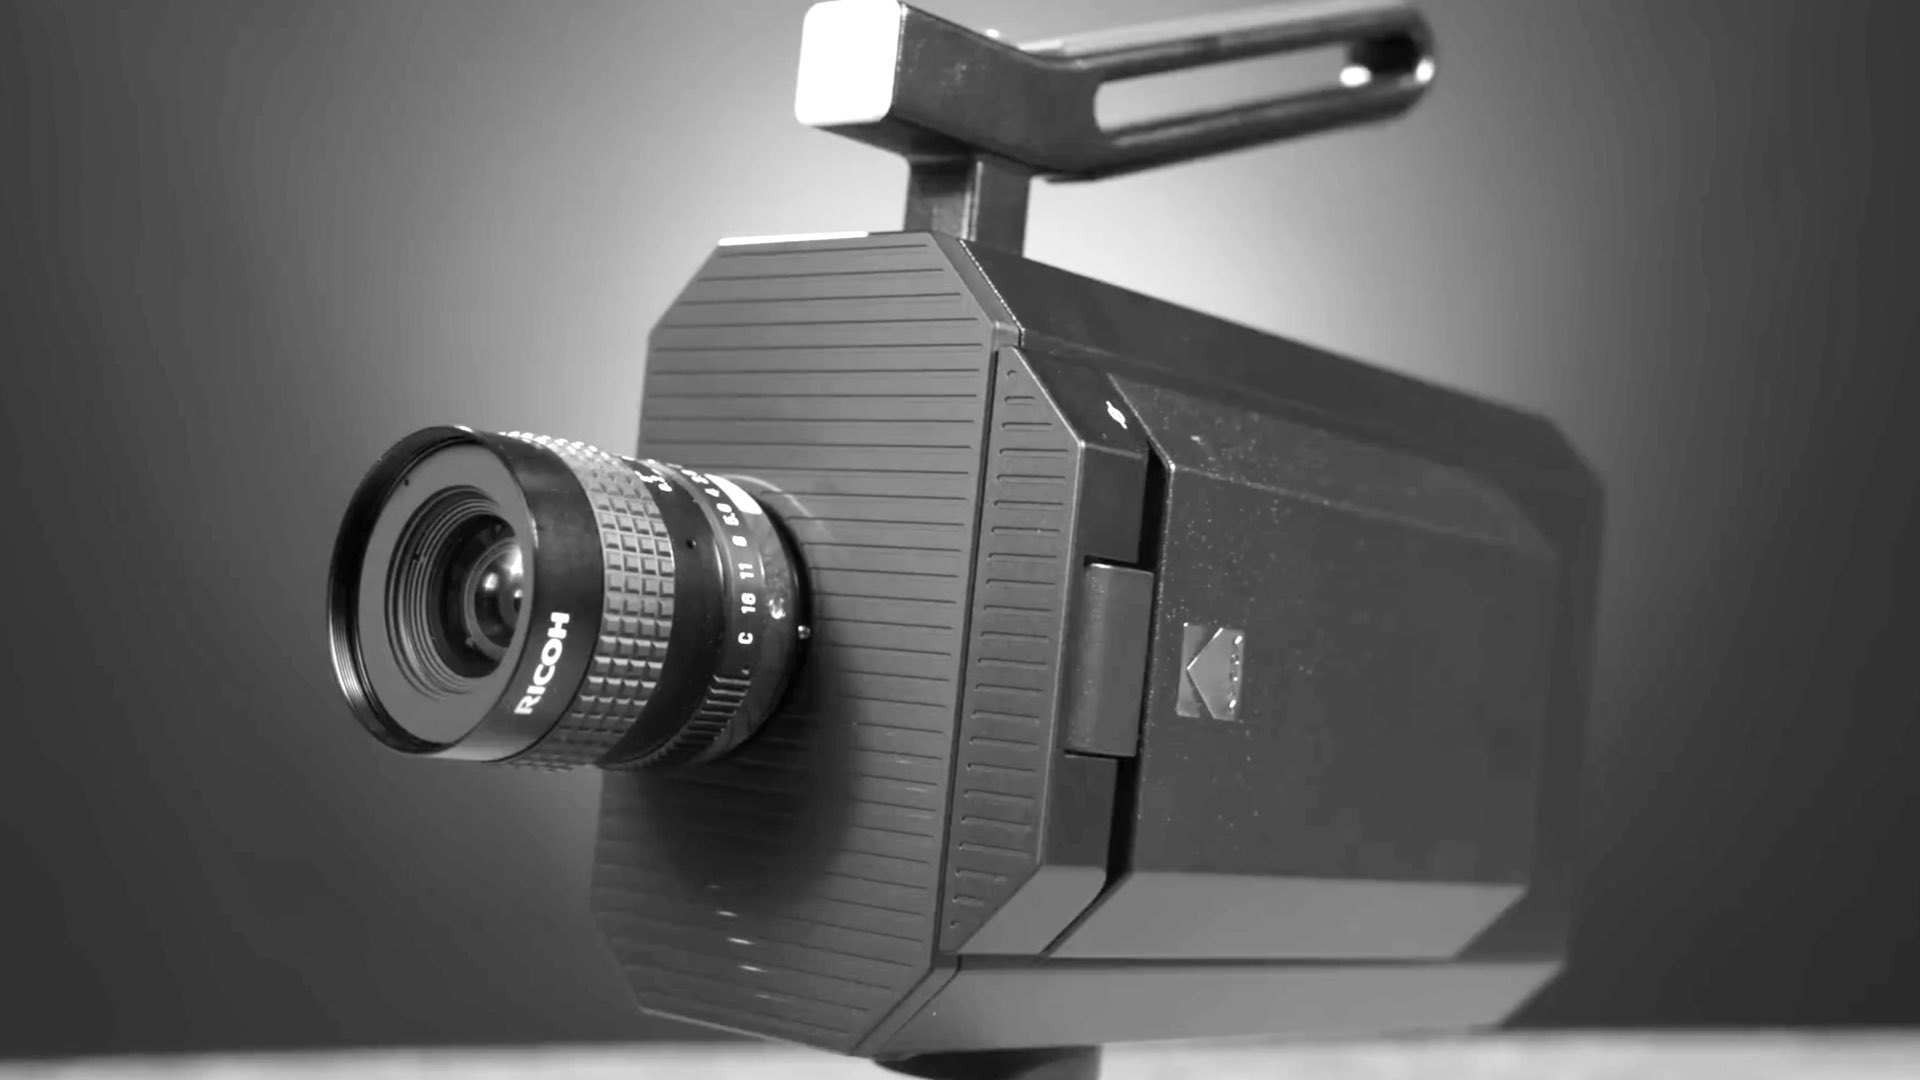 Kodak Super 8 Camera: Test Footage and Insights